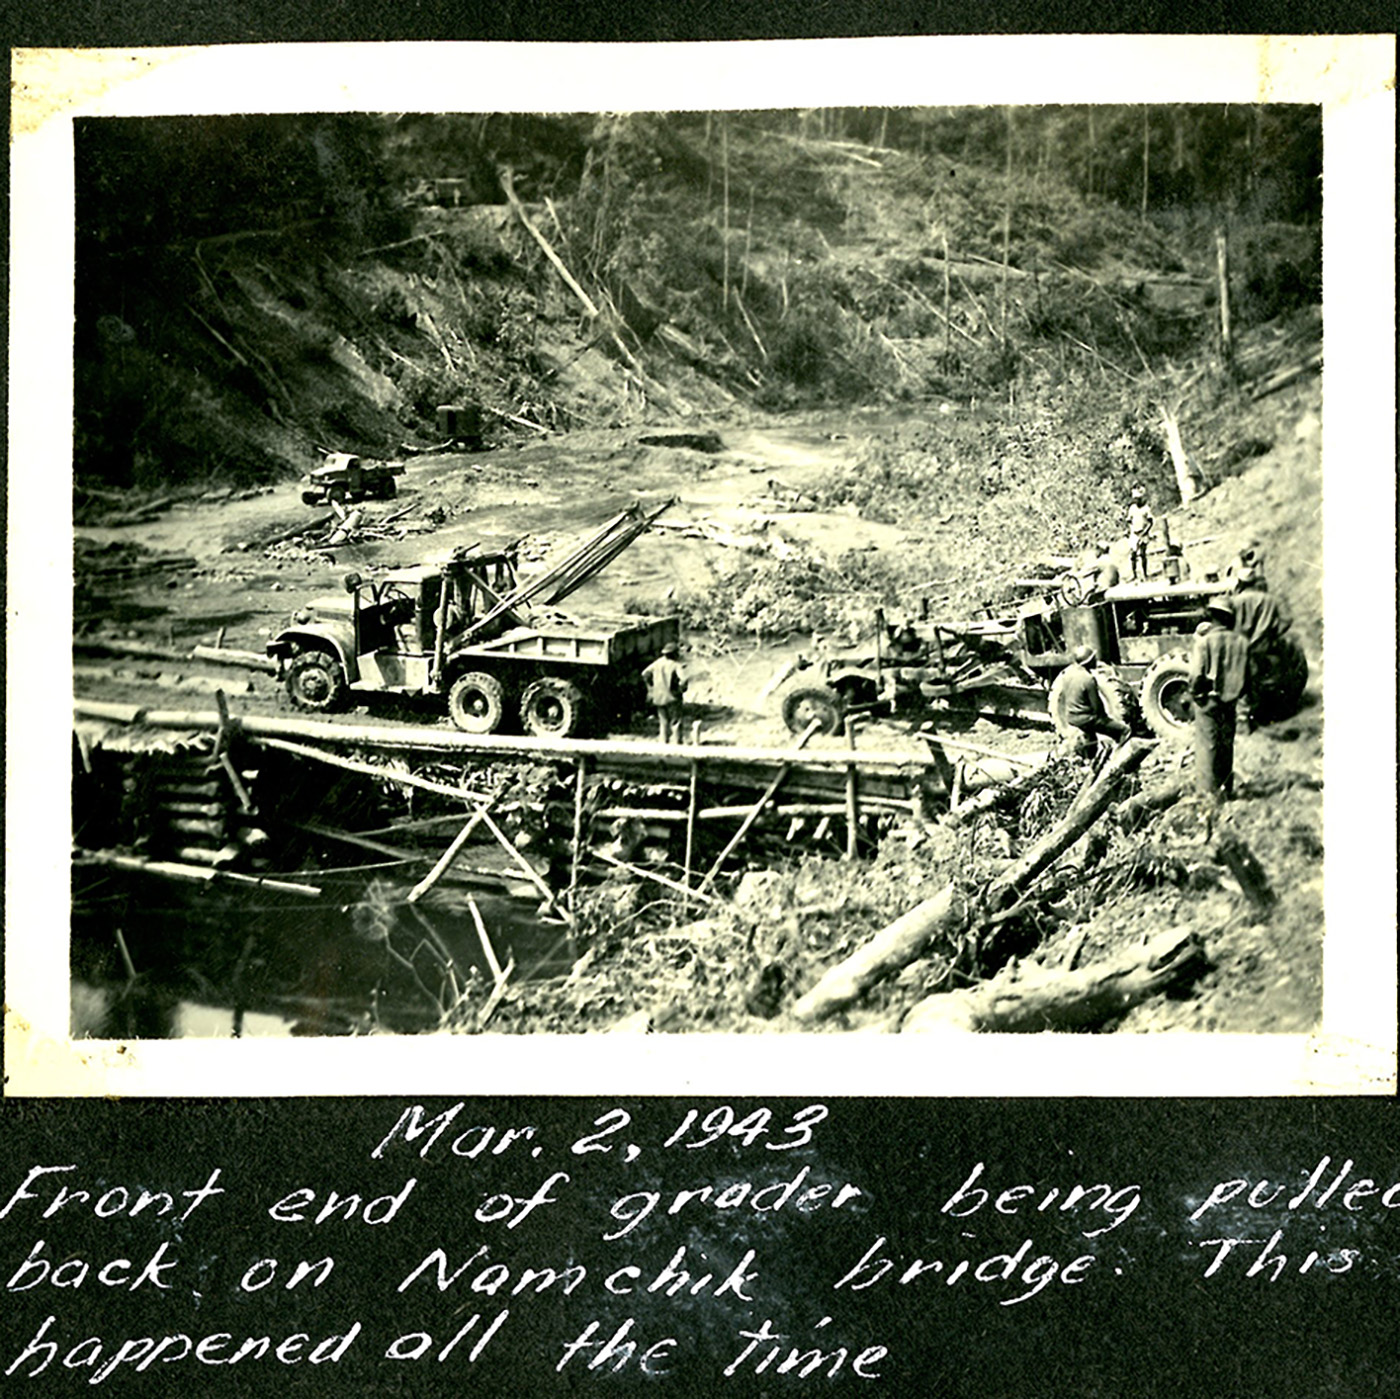 heavy equipment crossing a crude bridge